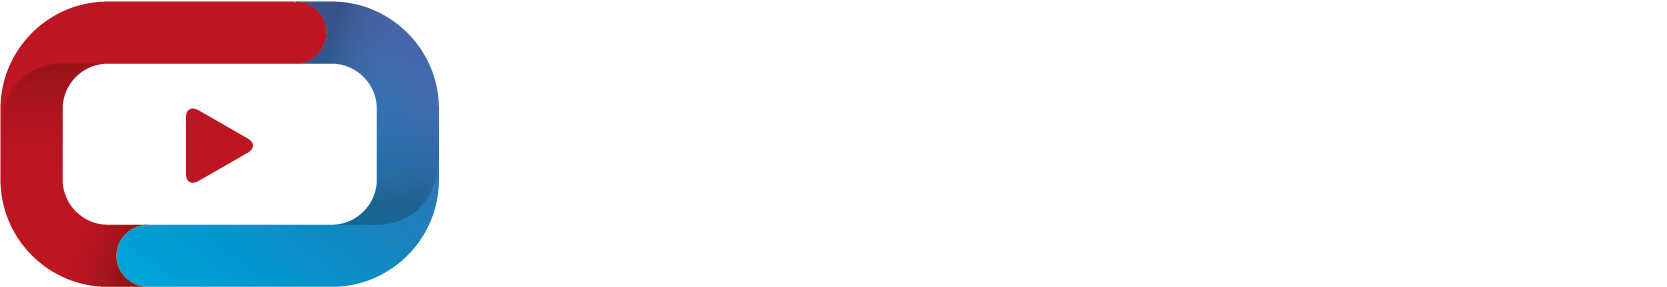 Digital Signage Logo